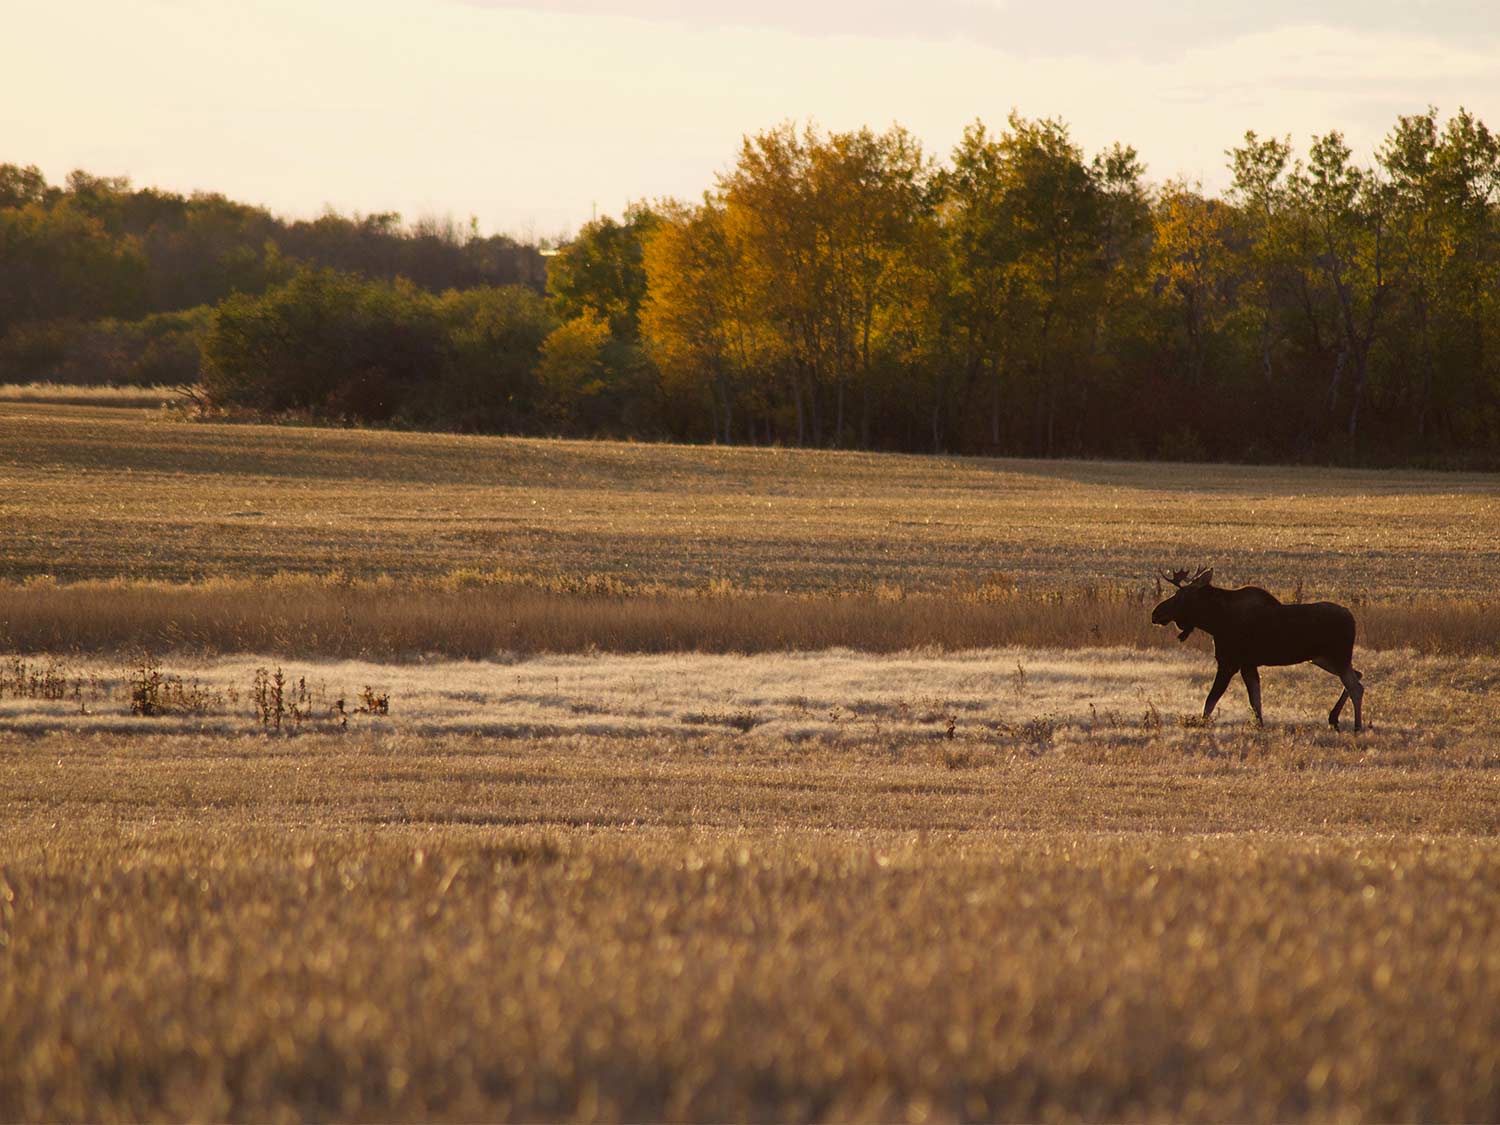 a young bull moose walking through an open field.